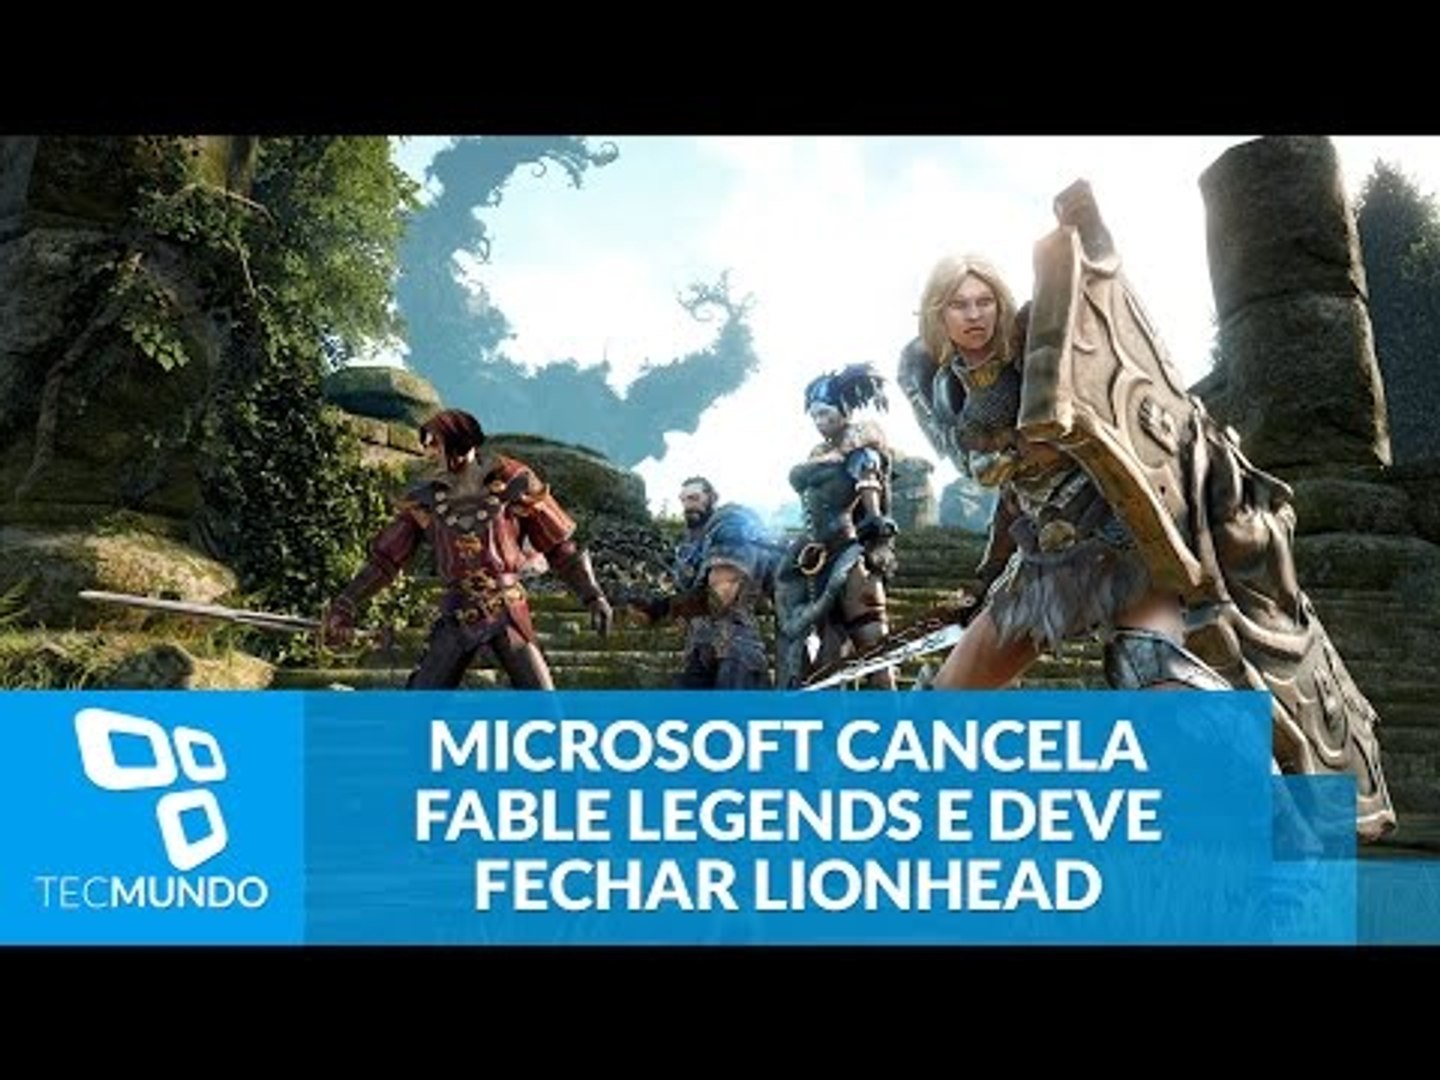 Bomba! Microsoft cancela Fable Legends e deve fechar Lionhead